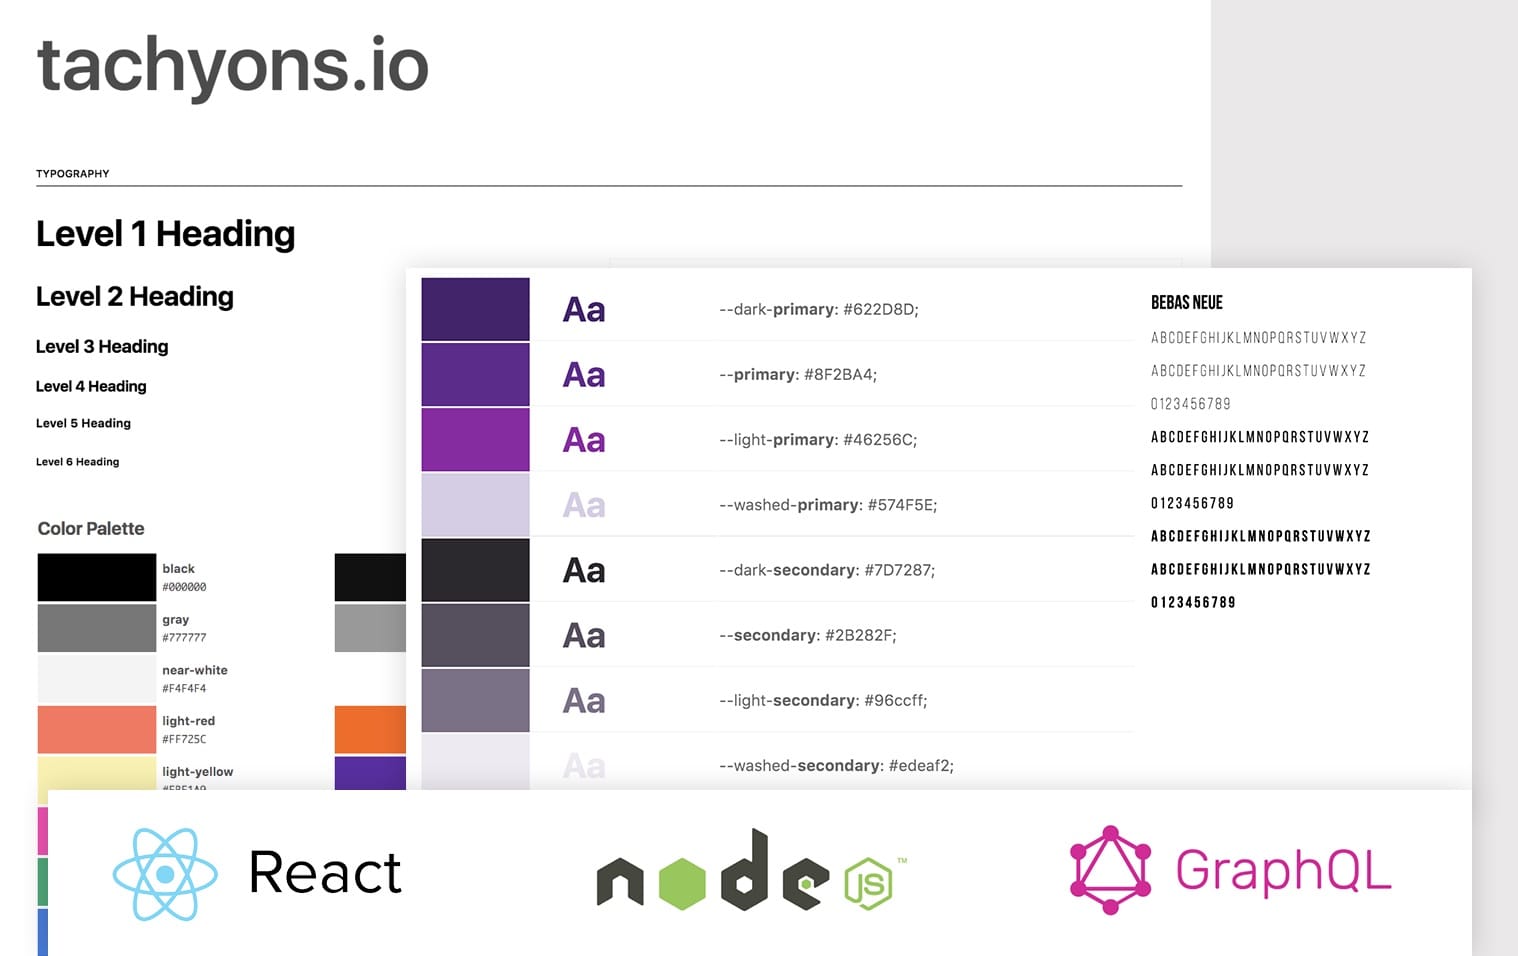 Technologies: React, node.js, GraphQL, Tachyons CSS